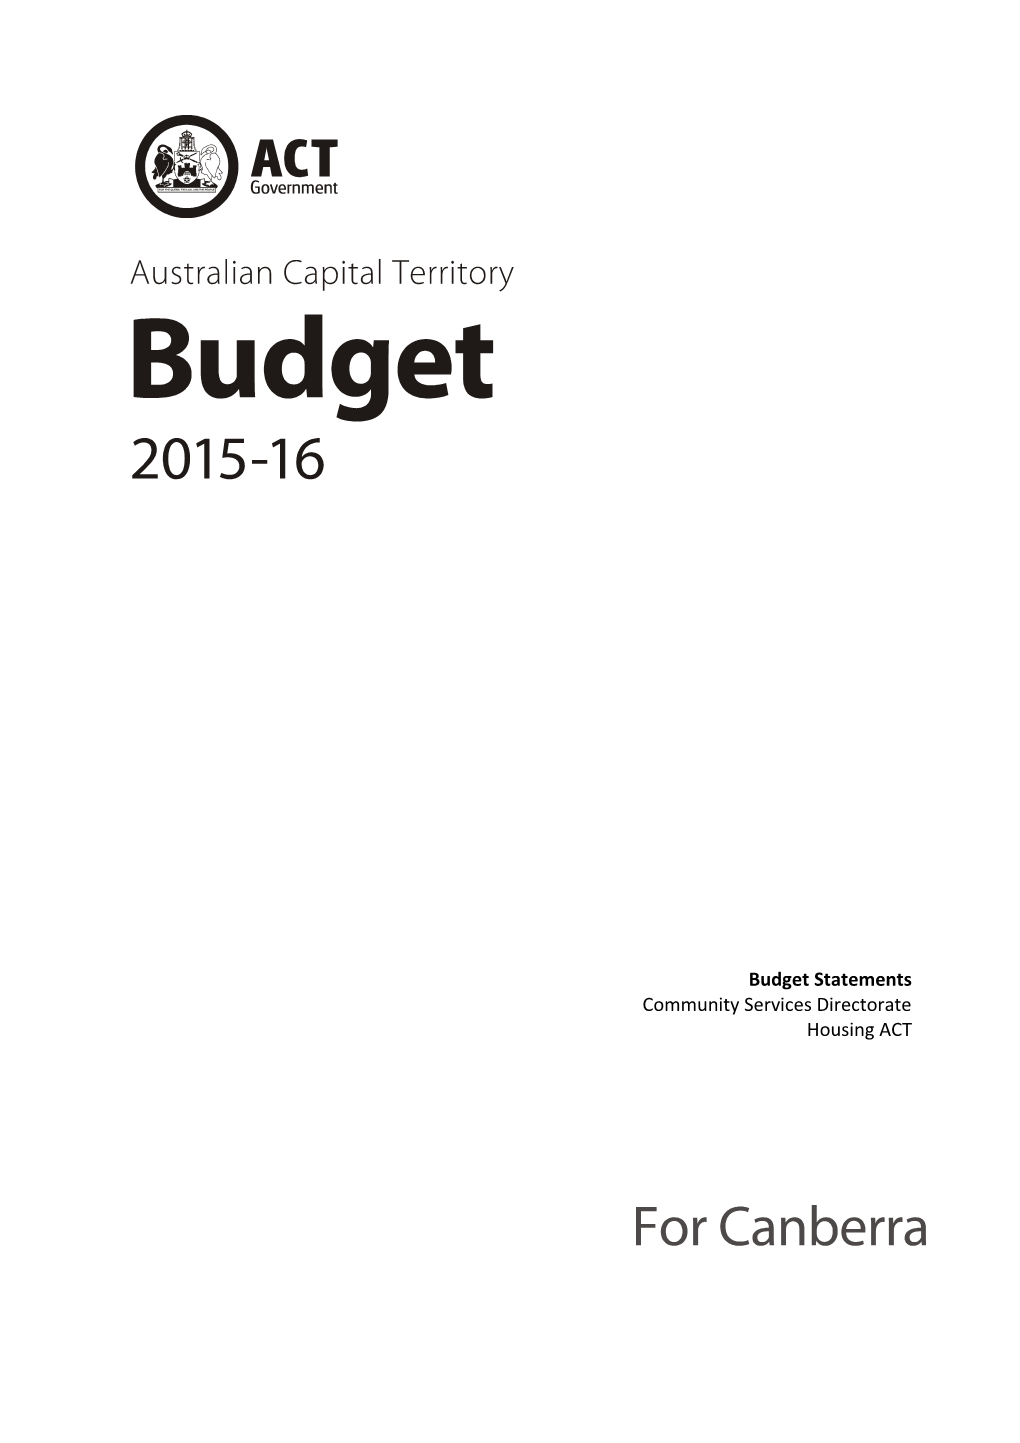 2015-16 Community Service Directorate Budget Statement